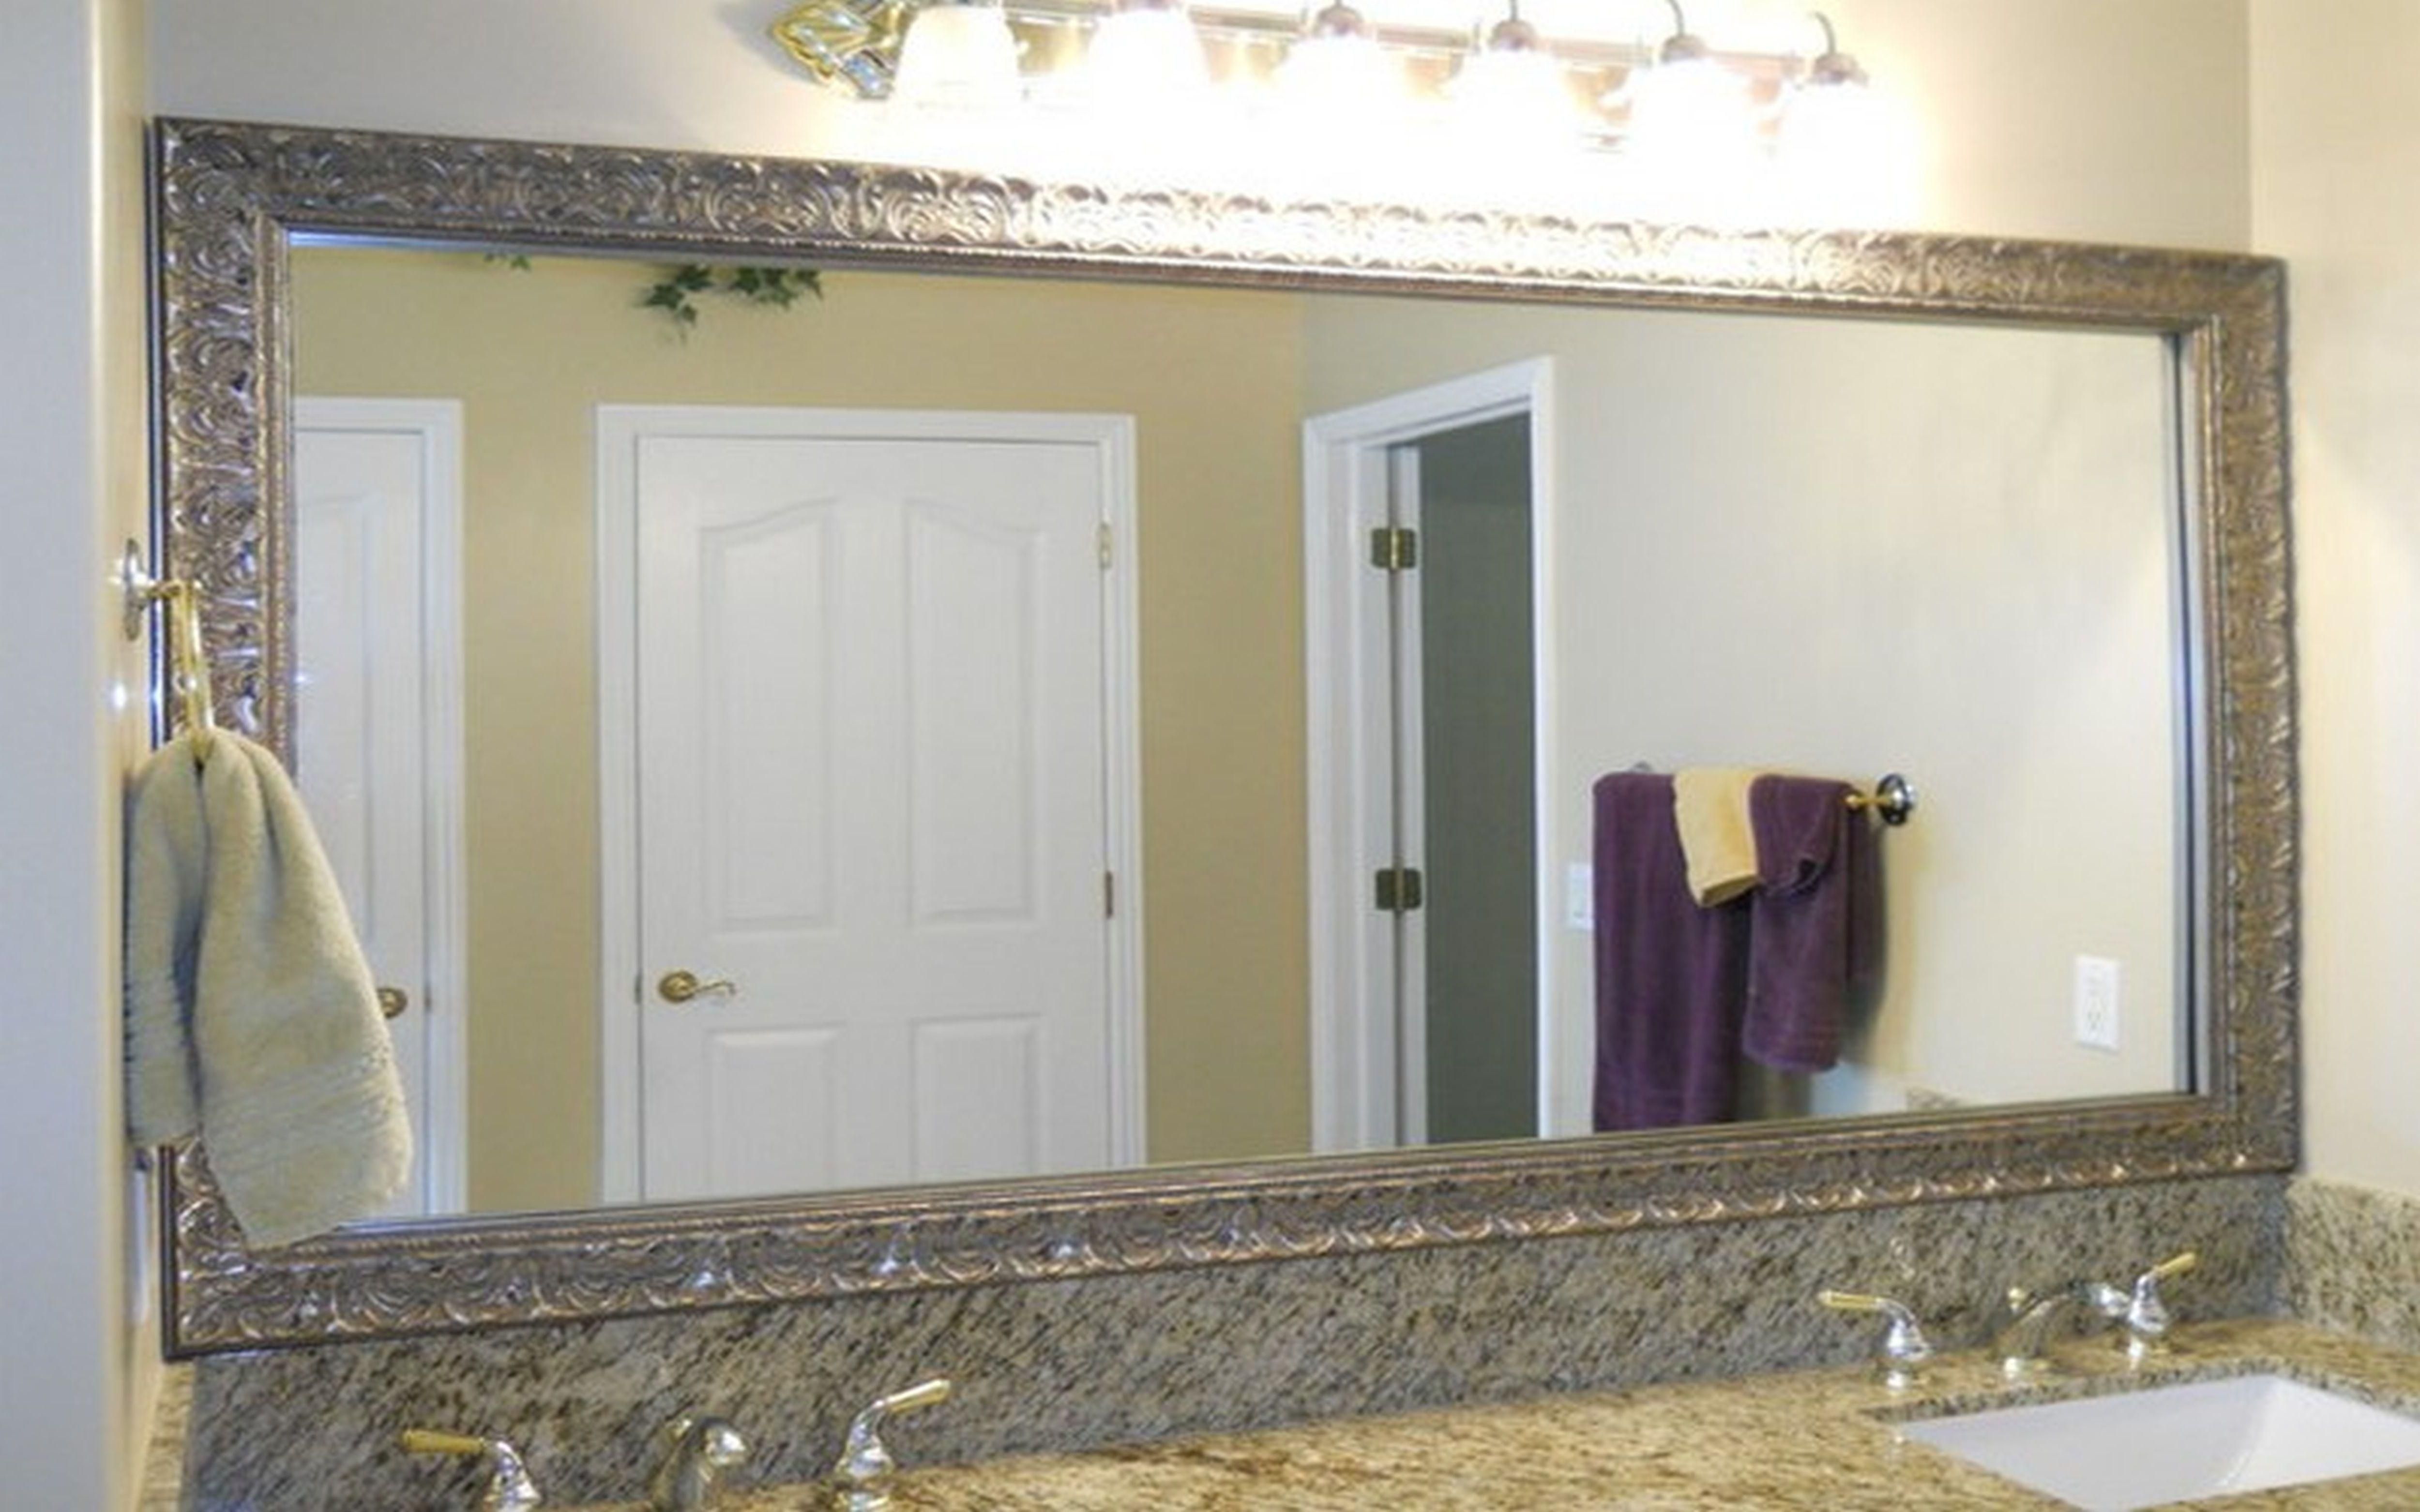 Bathroom: Elegant Bathroom Decor With Large Framed Bathroom Regarding Large Venetian Wall Mirror (View 14 of 20)